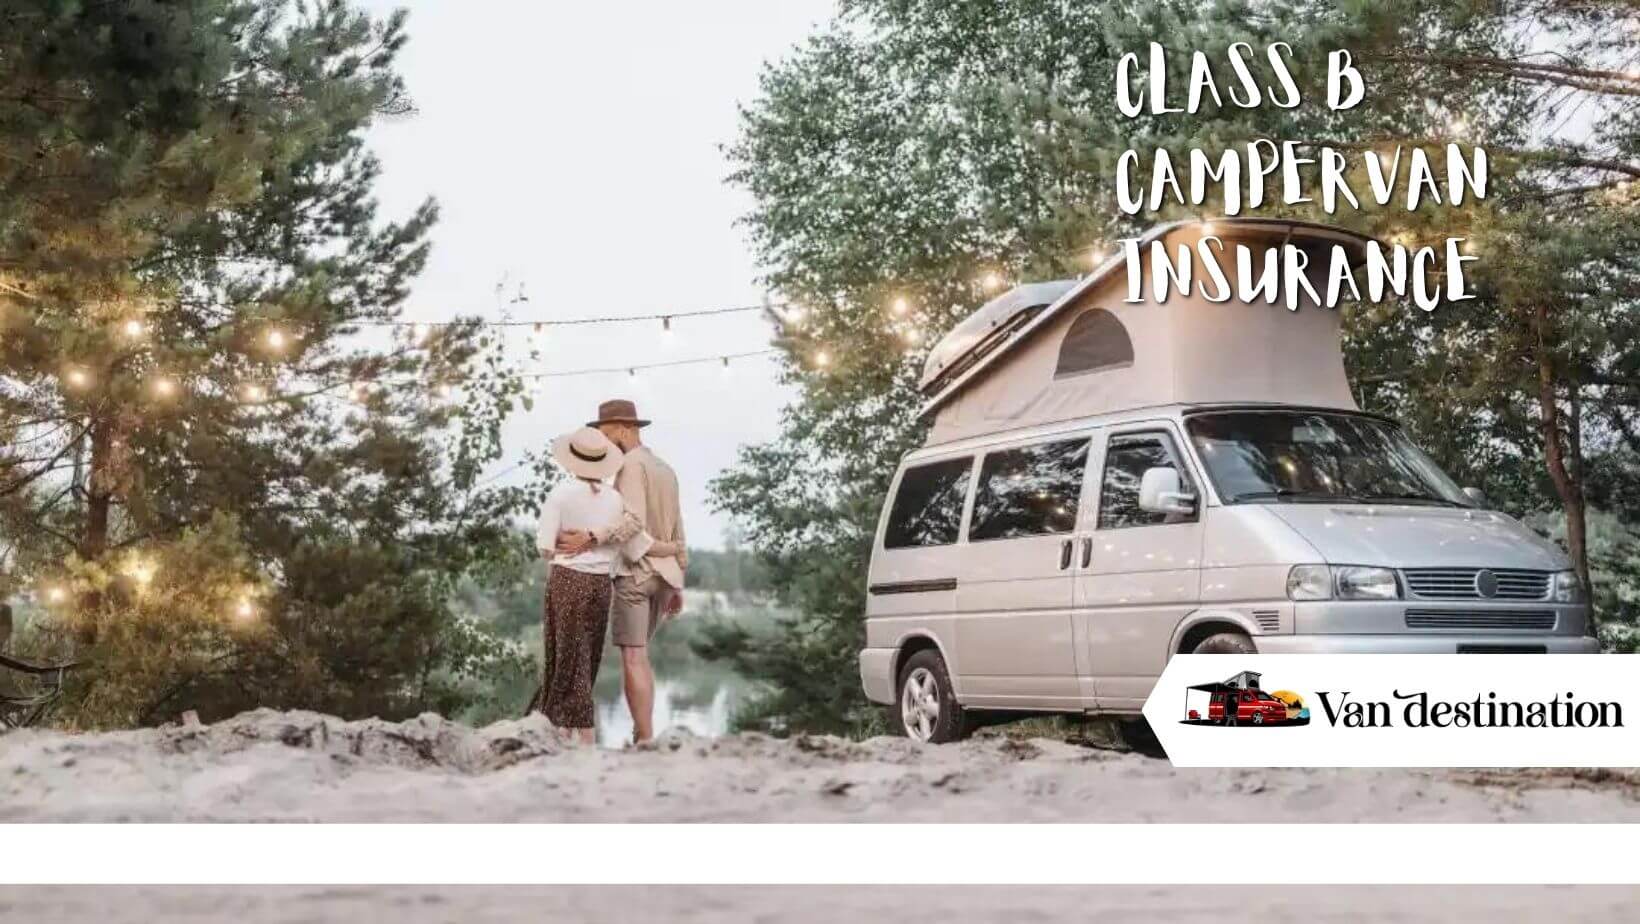 Class B Campervan Insurance - Van Destination